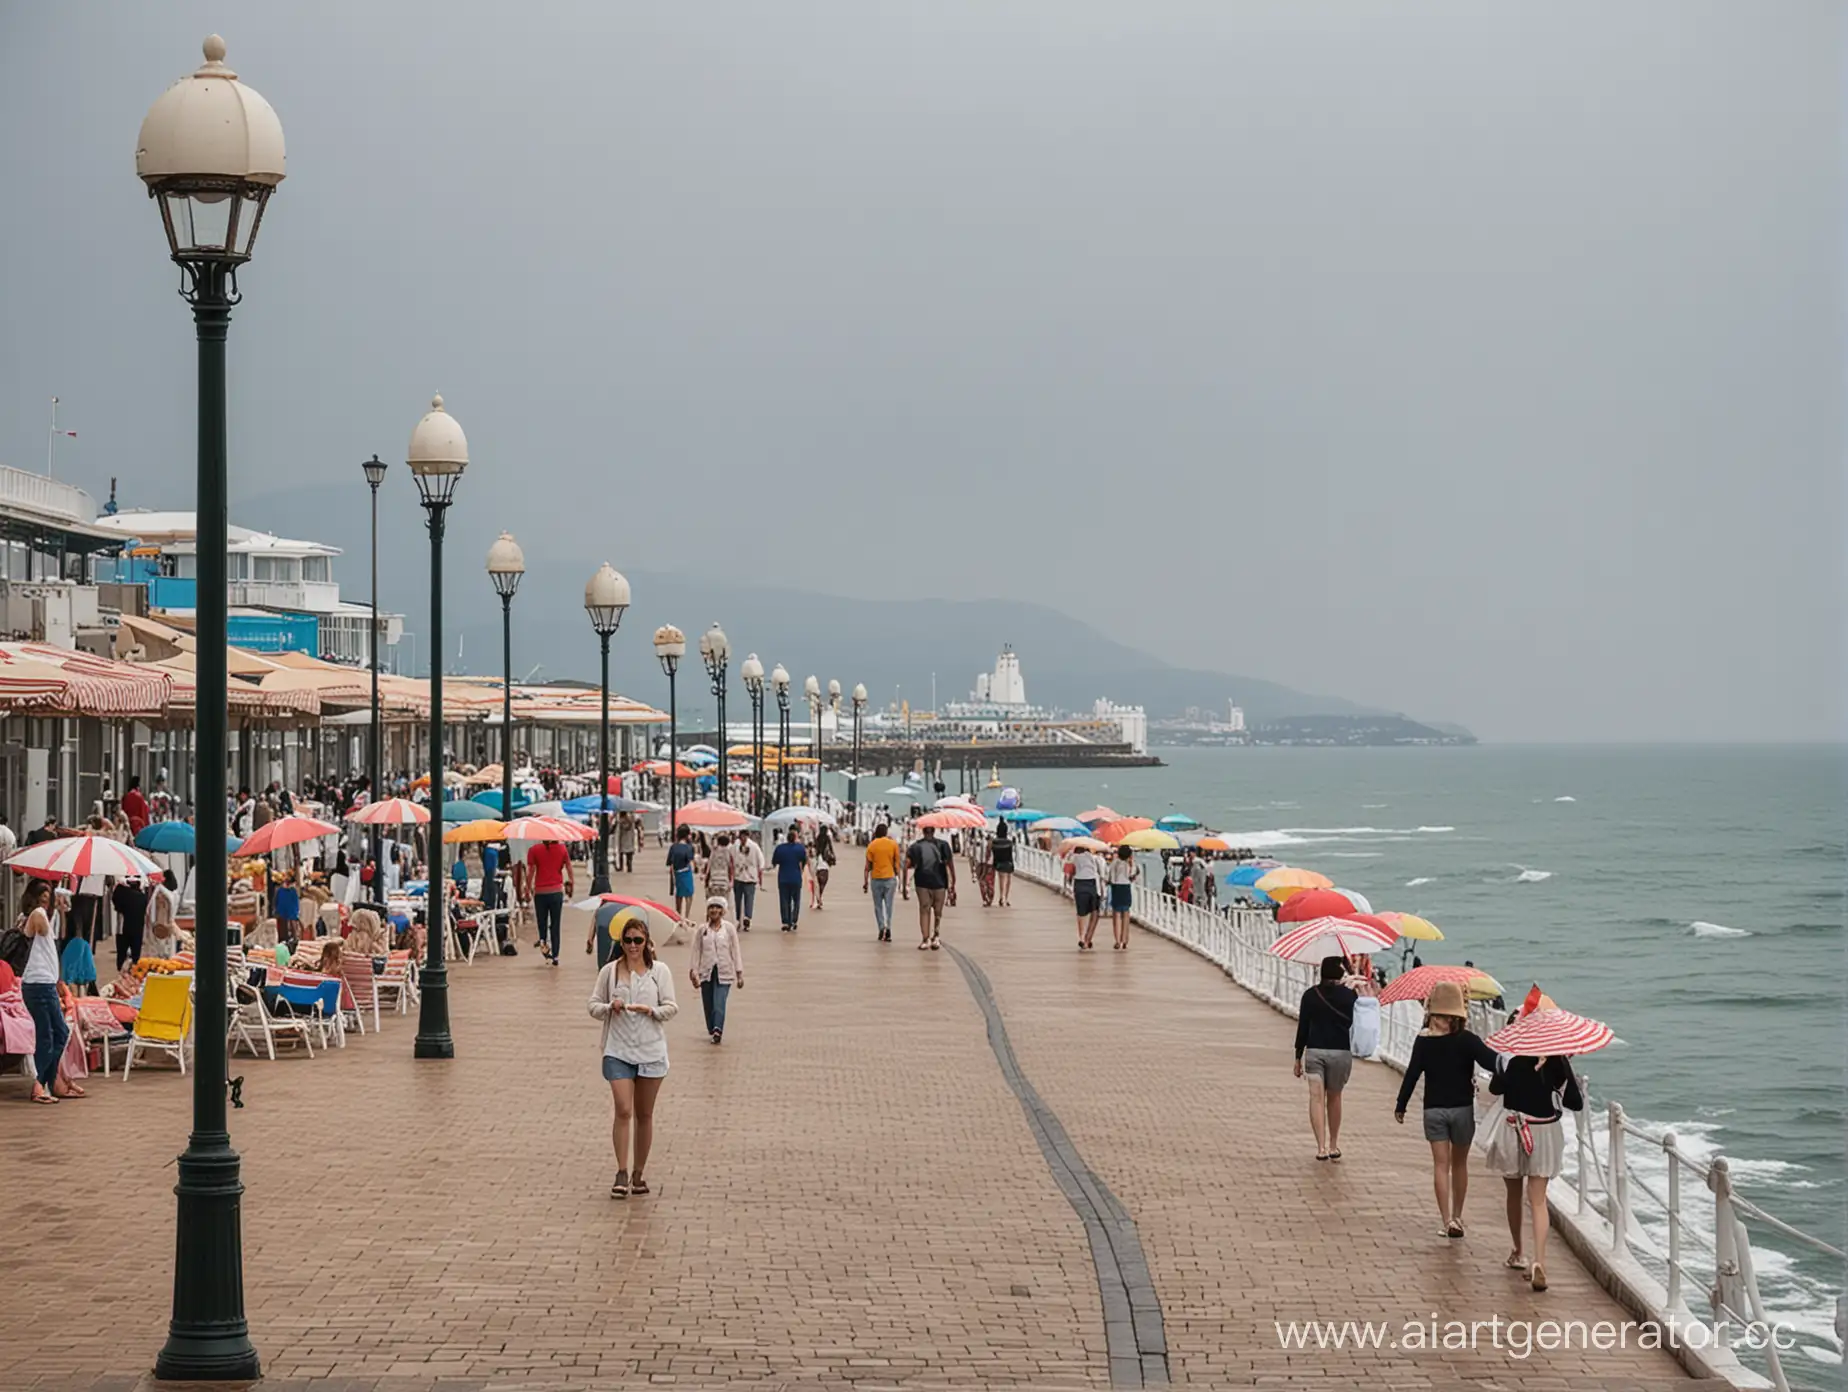 Seaside-Promenade-Tourists-Strolling-Under-Umbrellas